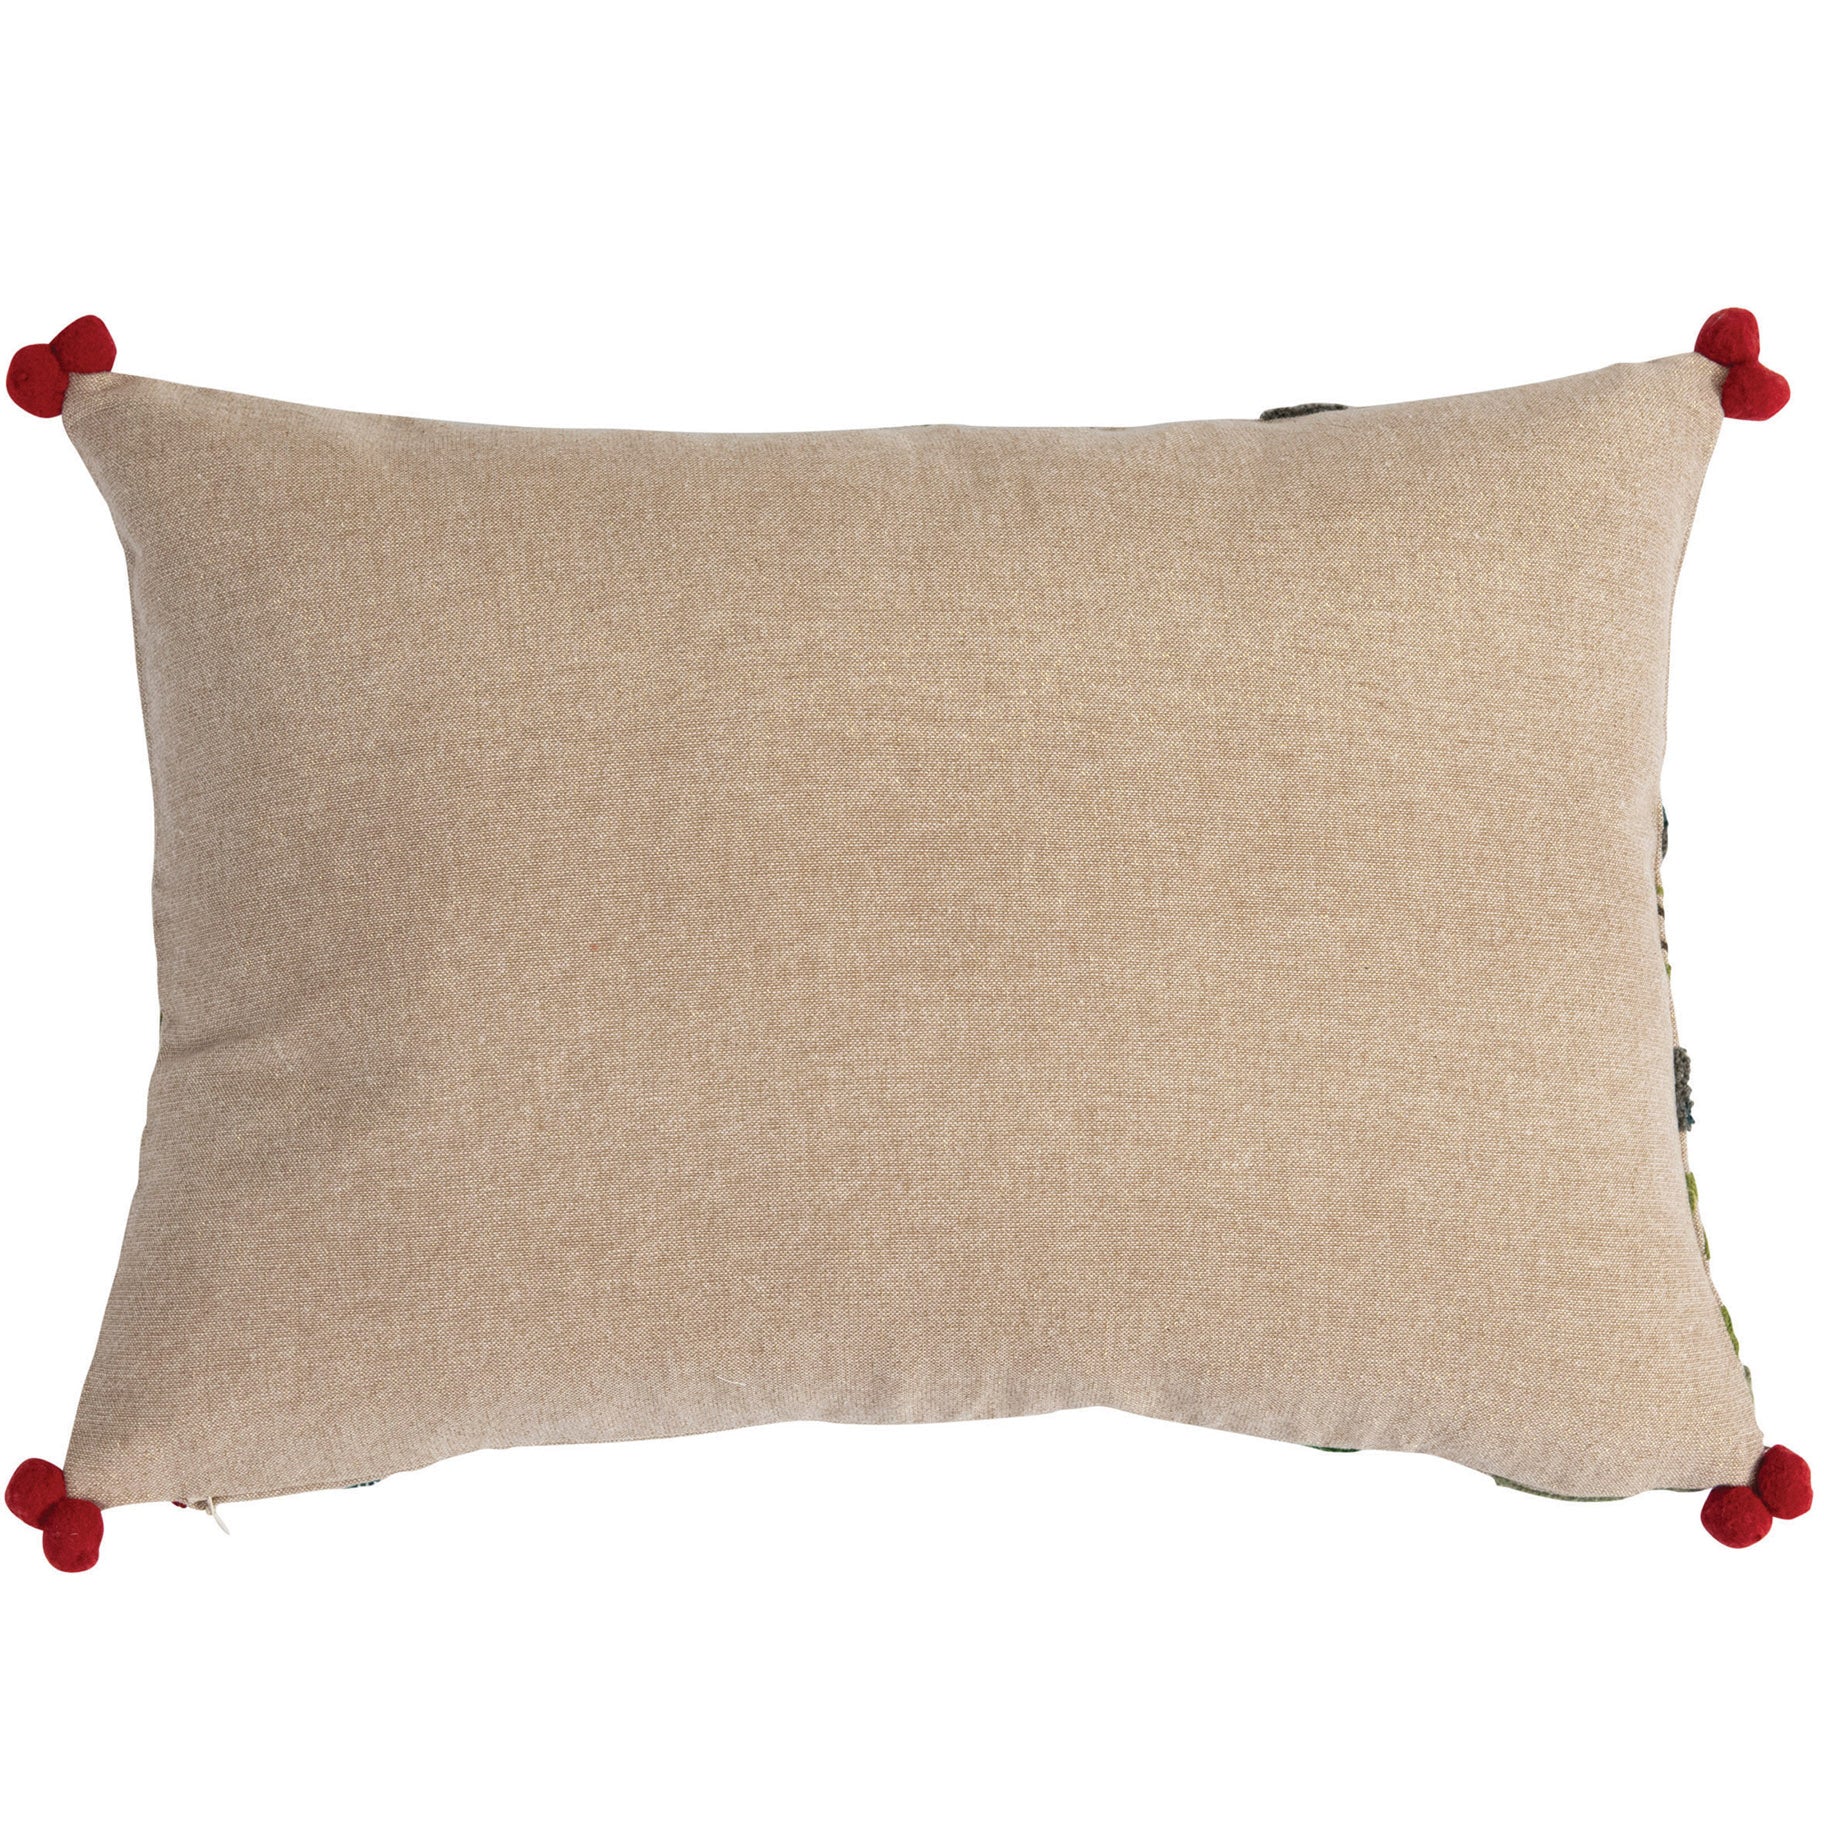 Chambray Christmas Lumbar Pillow Embroidered Peace